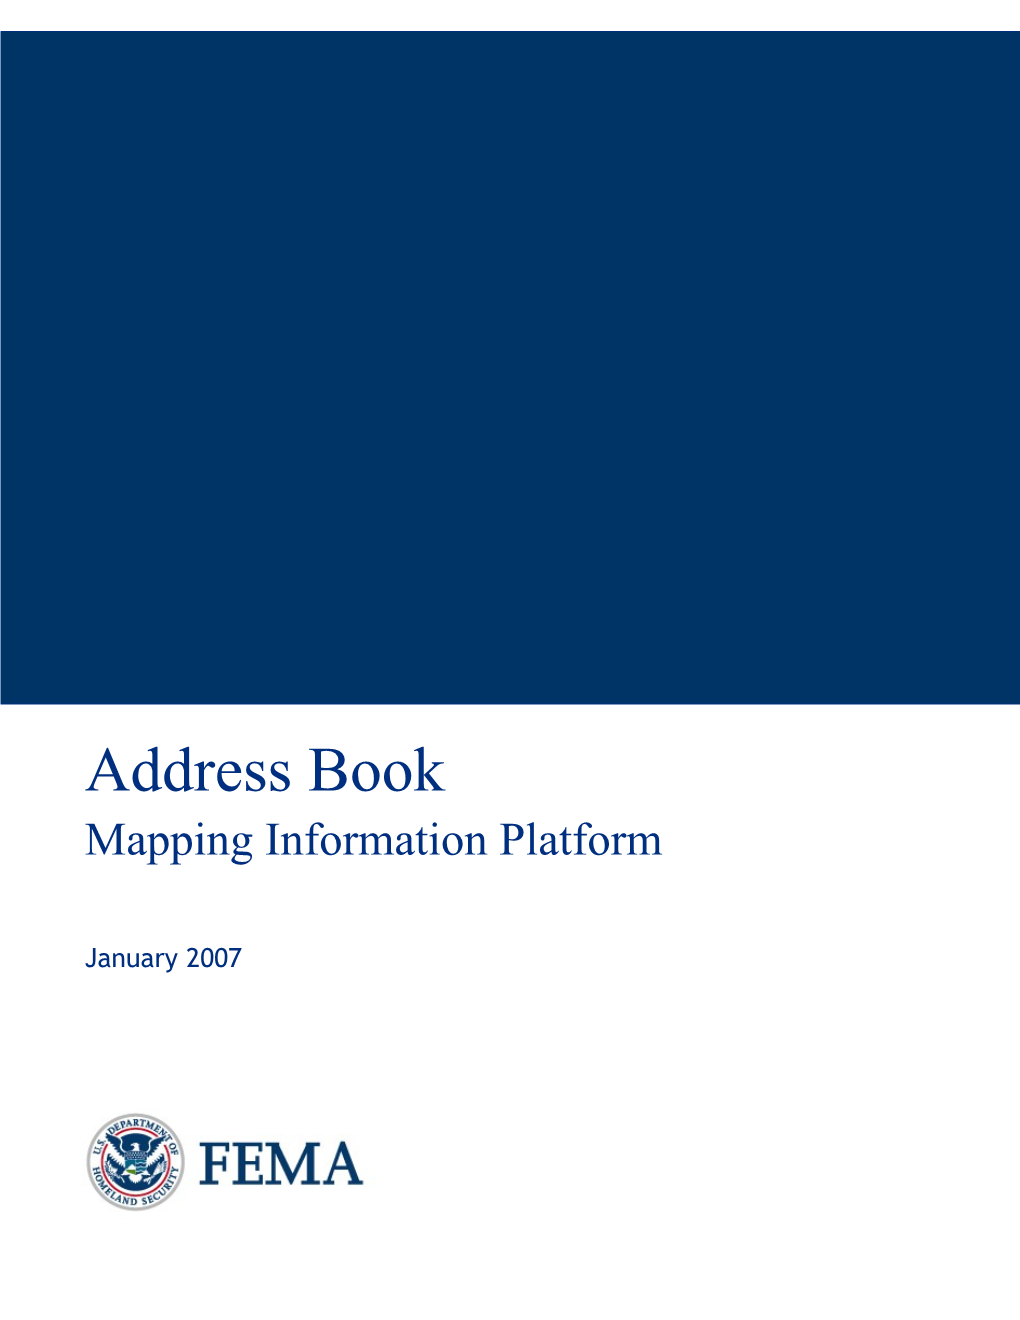 Mapping Information Platform (MIP) Address Book 1